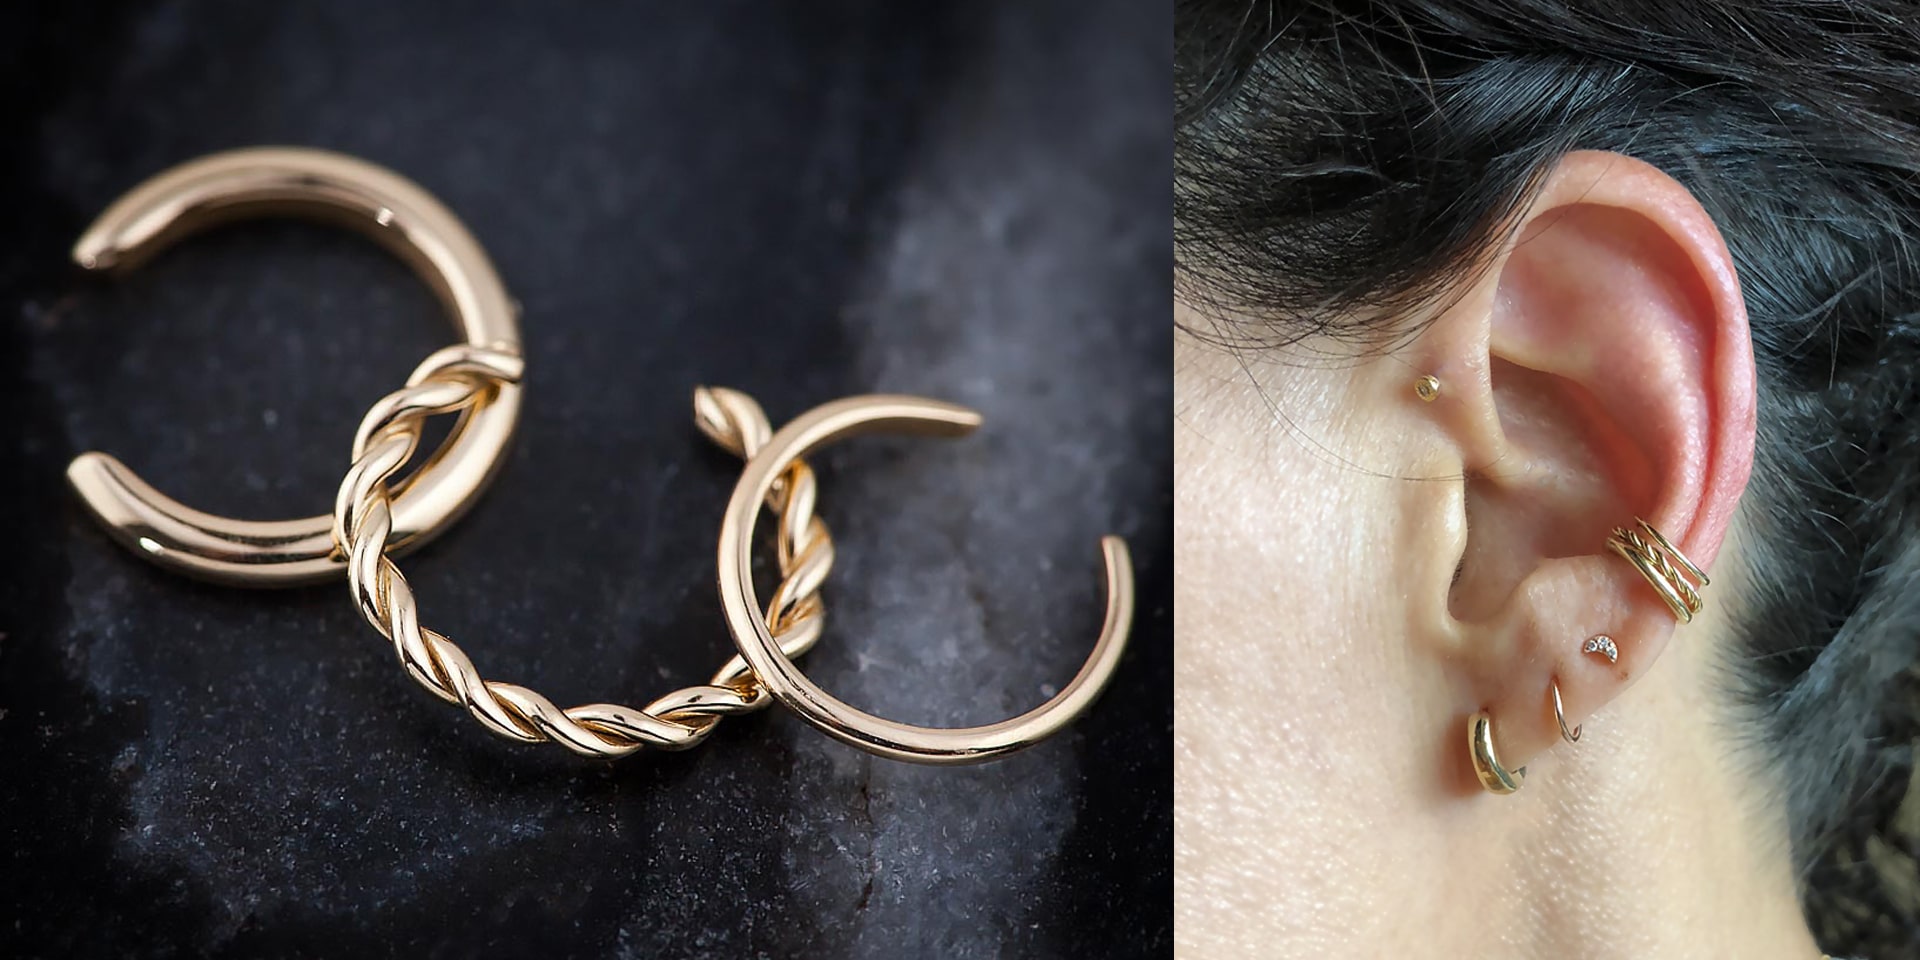 Non-Pierced Hoops Earrings 14K Yellow Gold | Jared